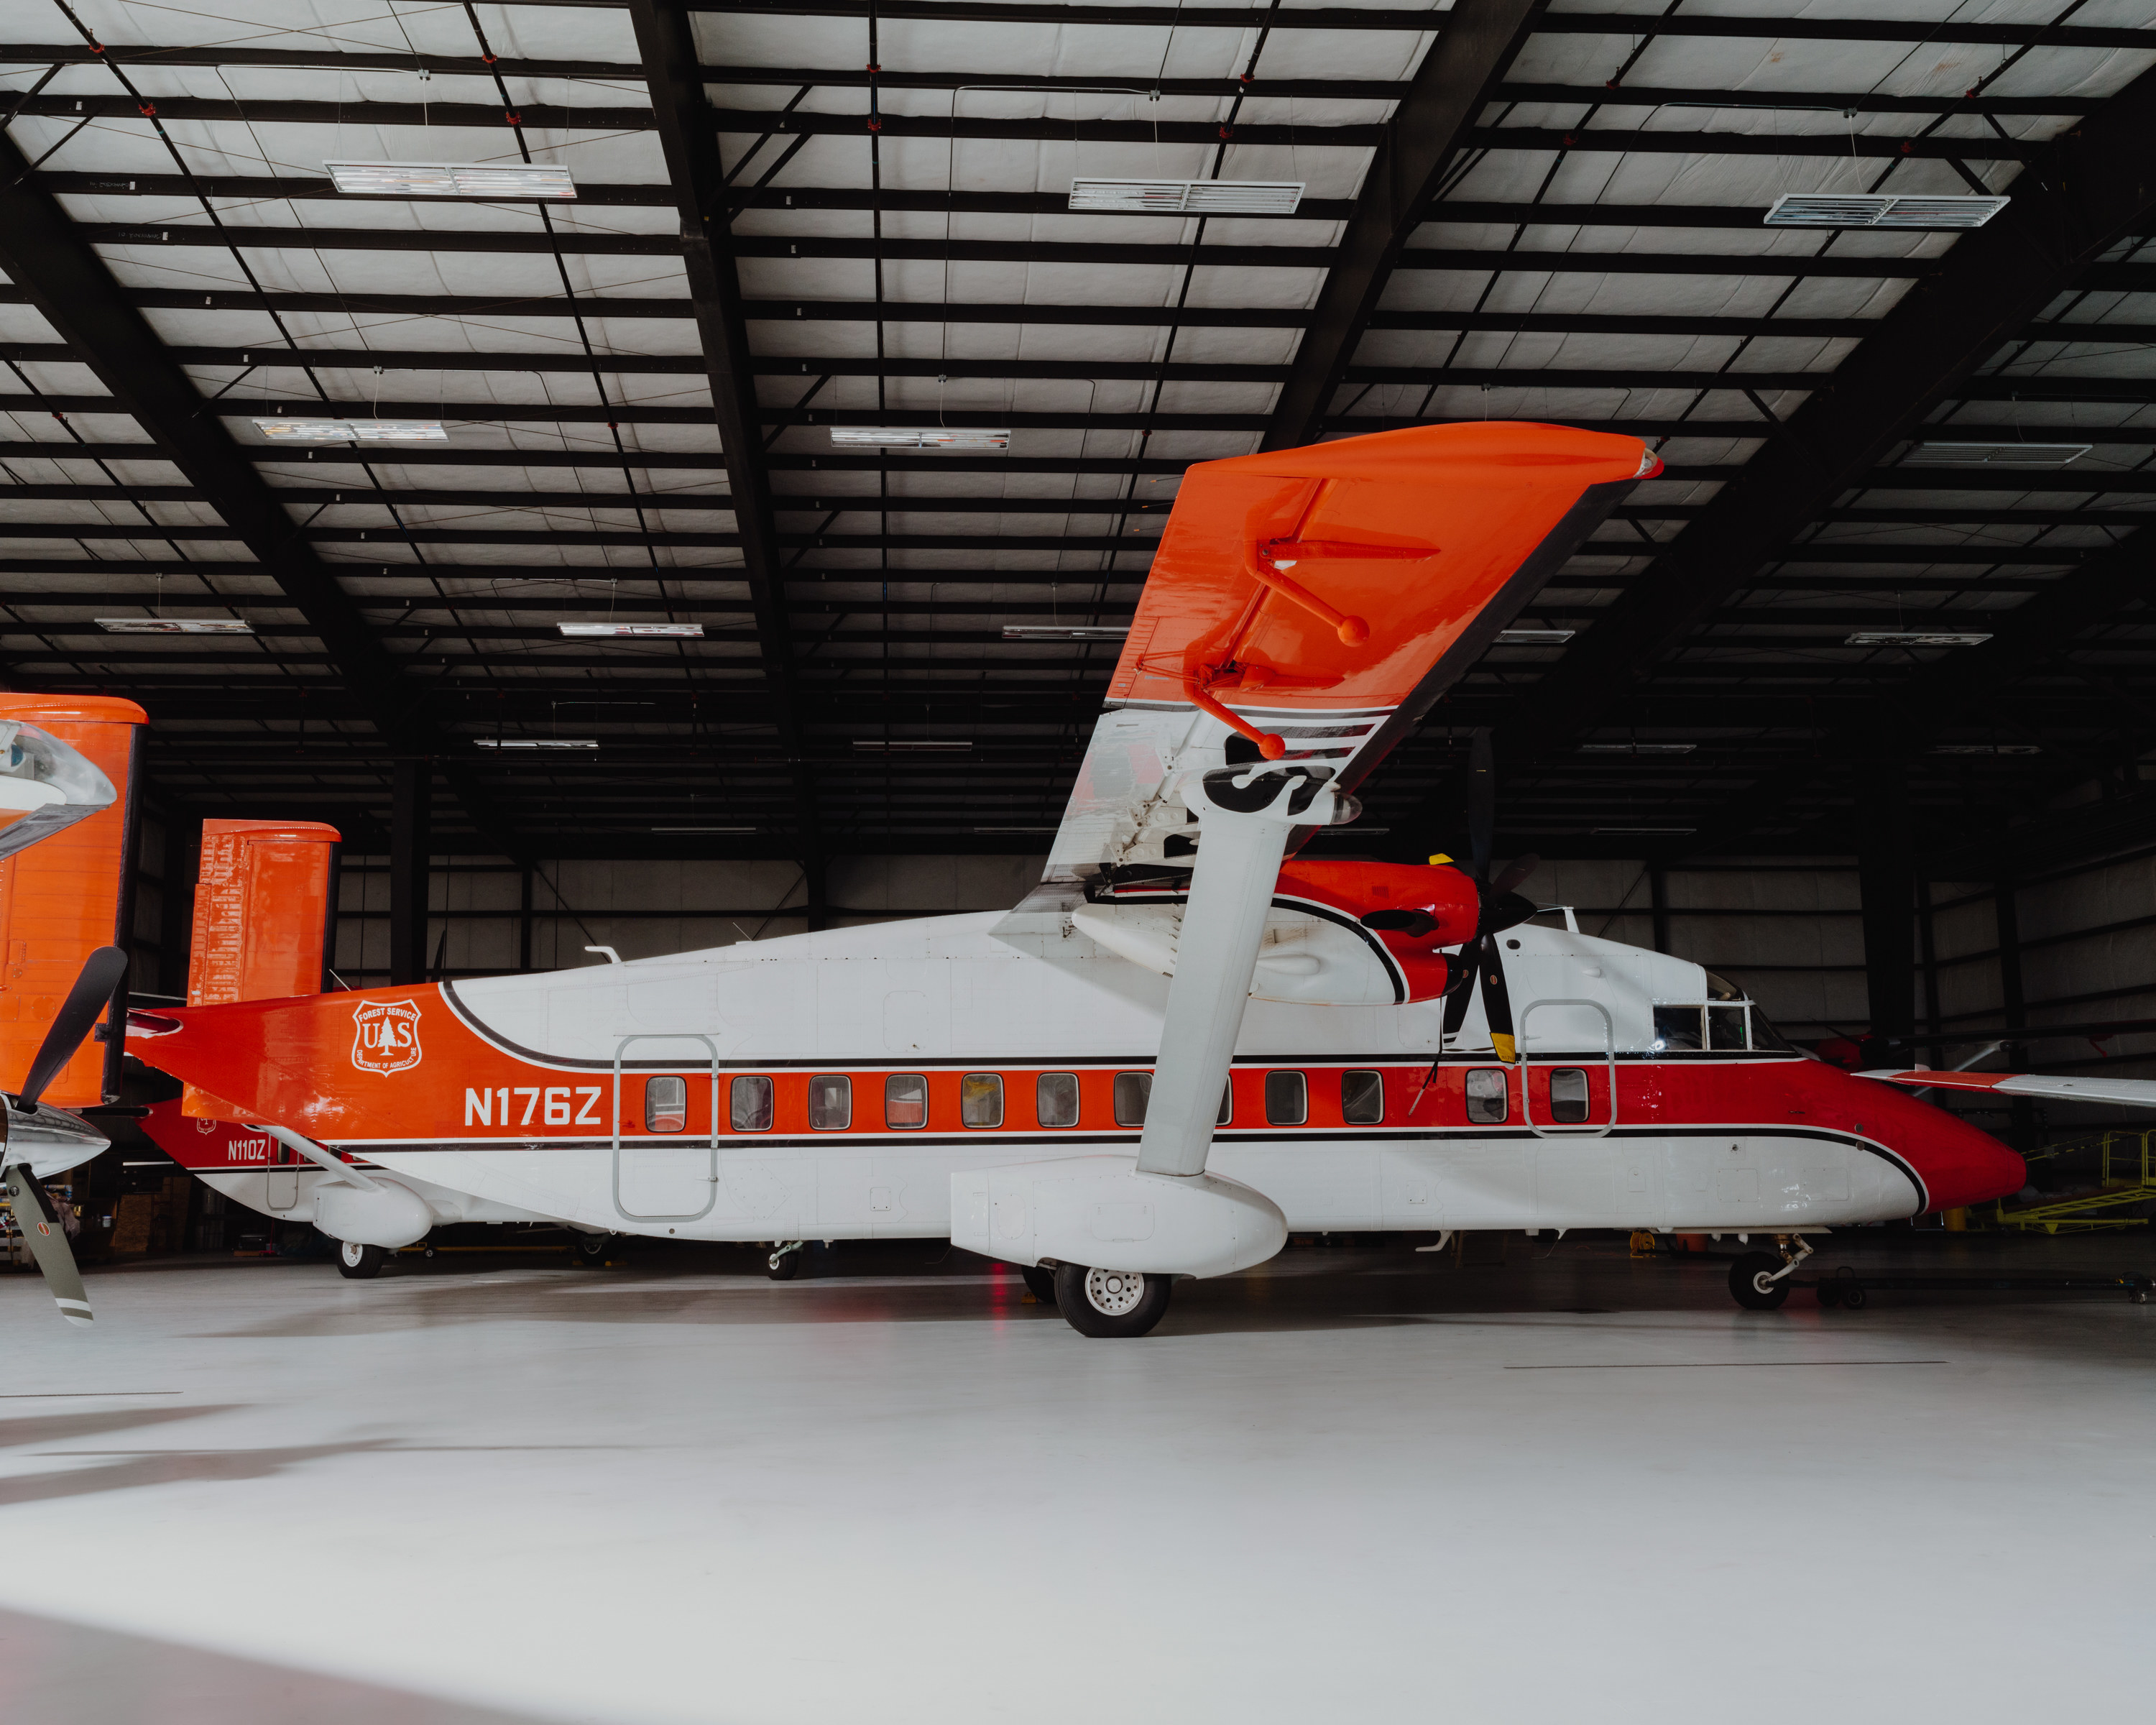 A white and orange plane in a hangar